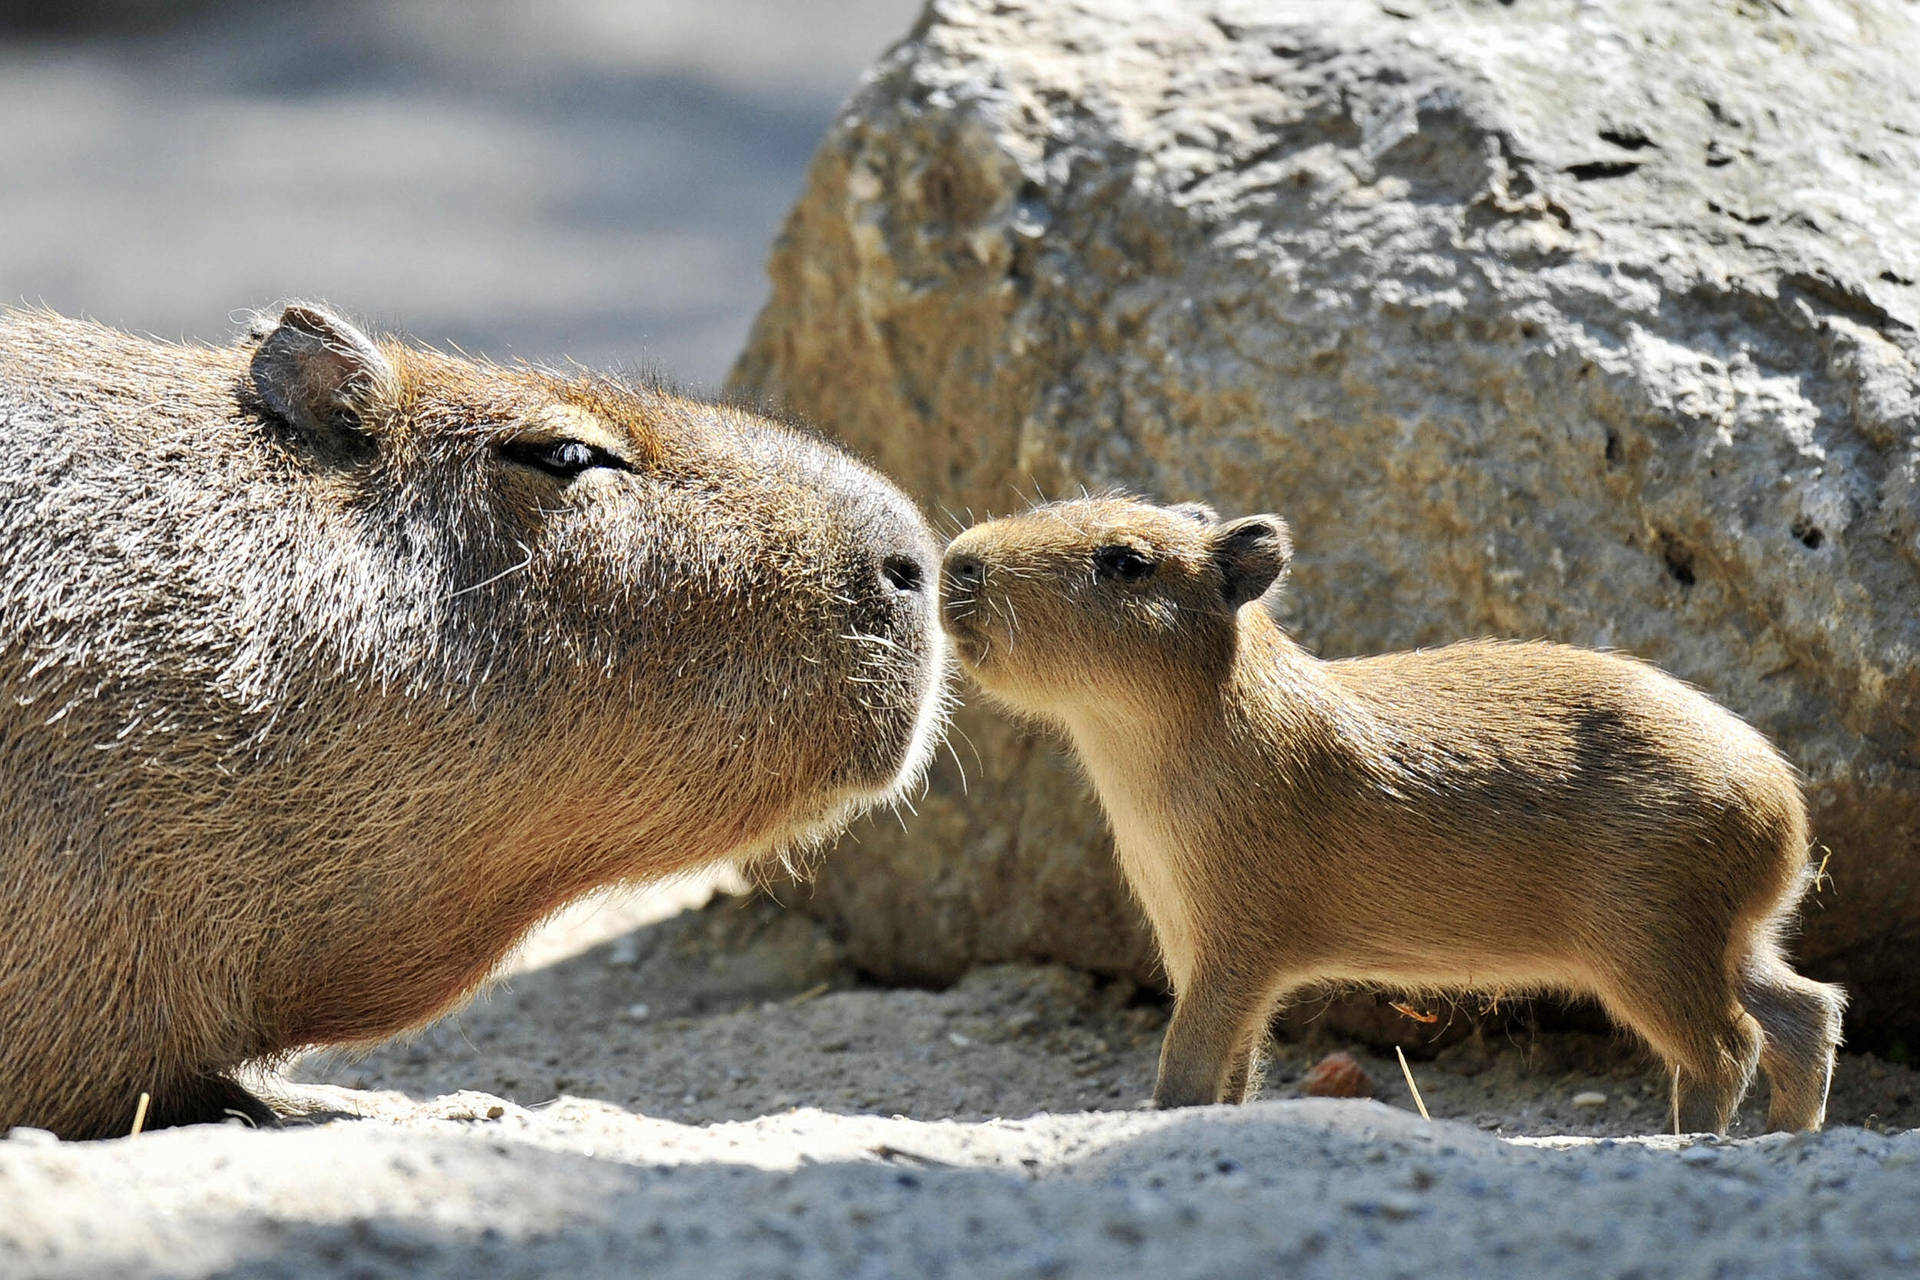 1637 Capybara Cartoon Images Stock Photos  Vectors  Shutterstock